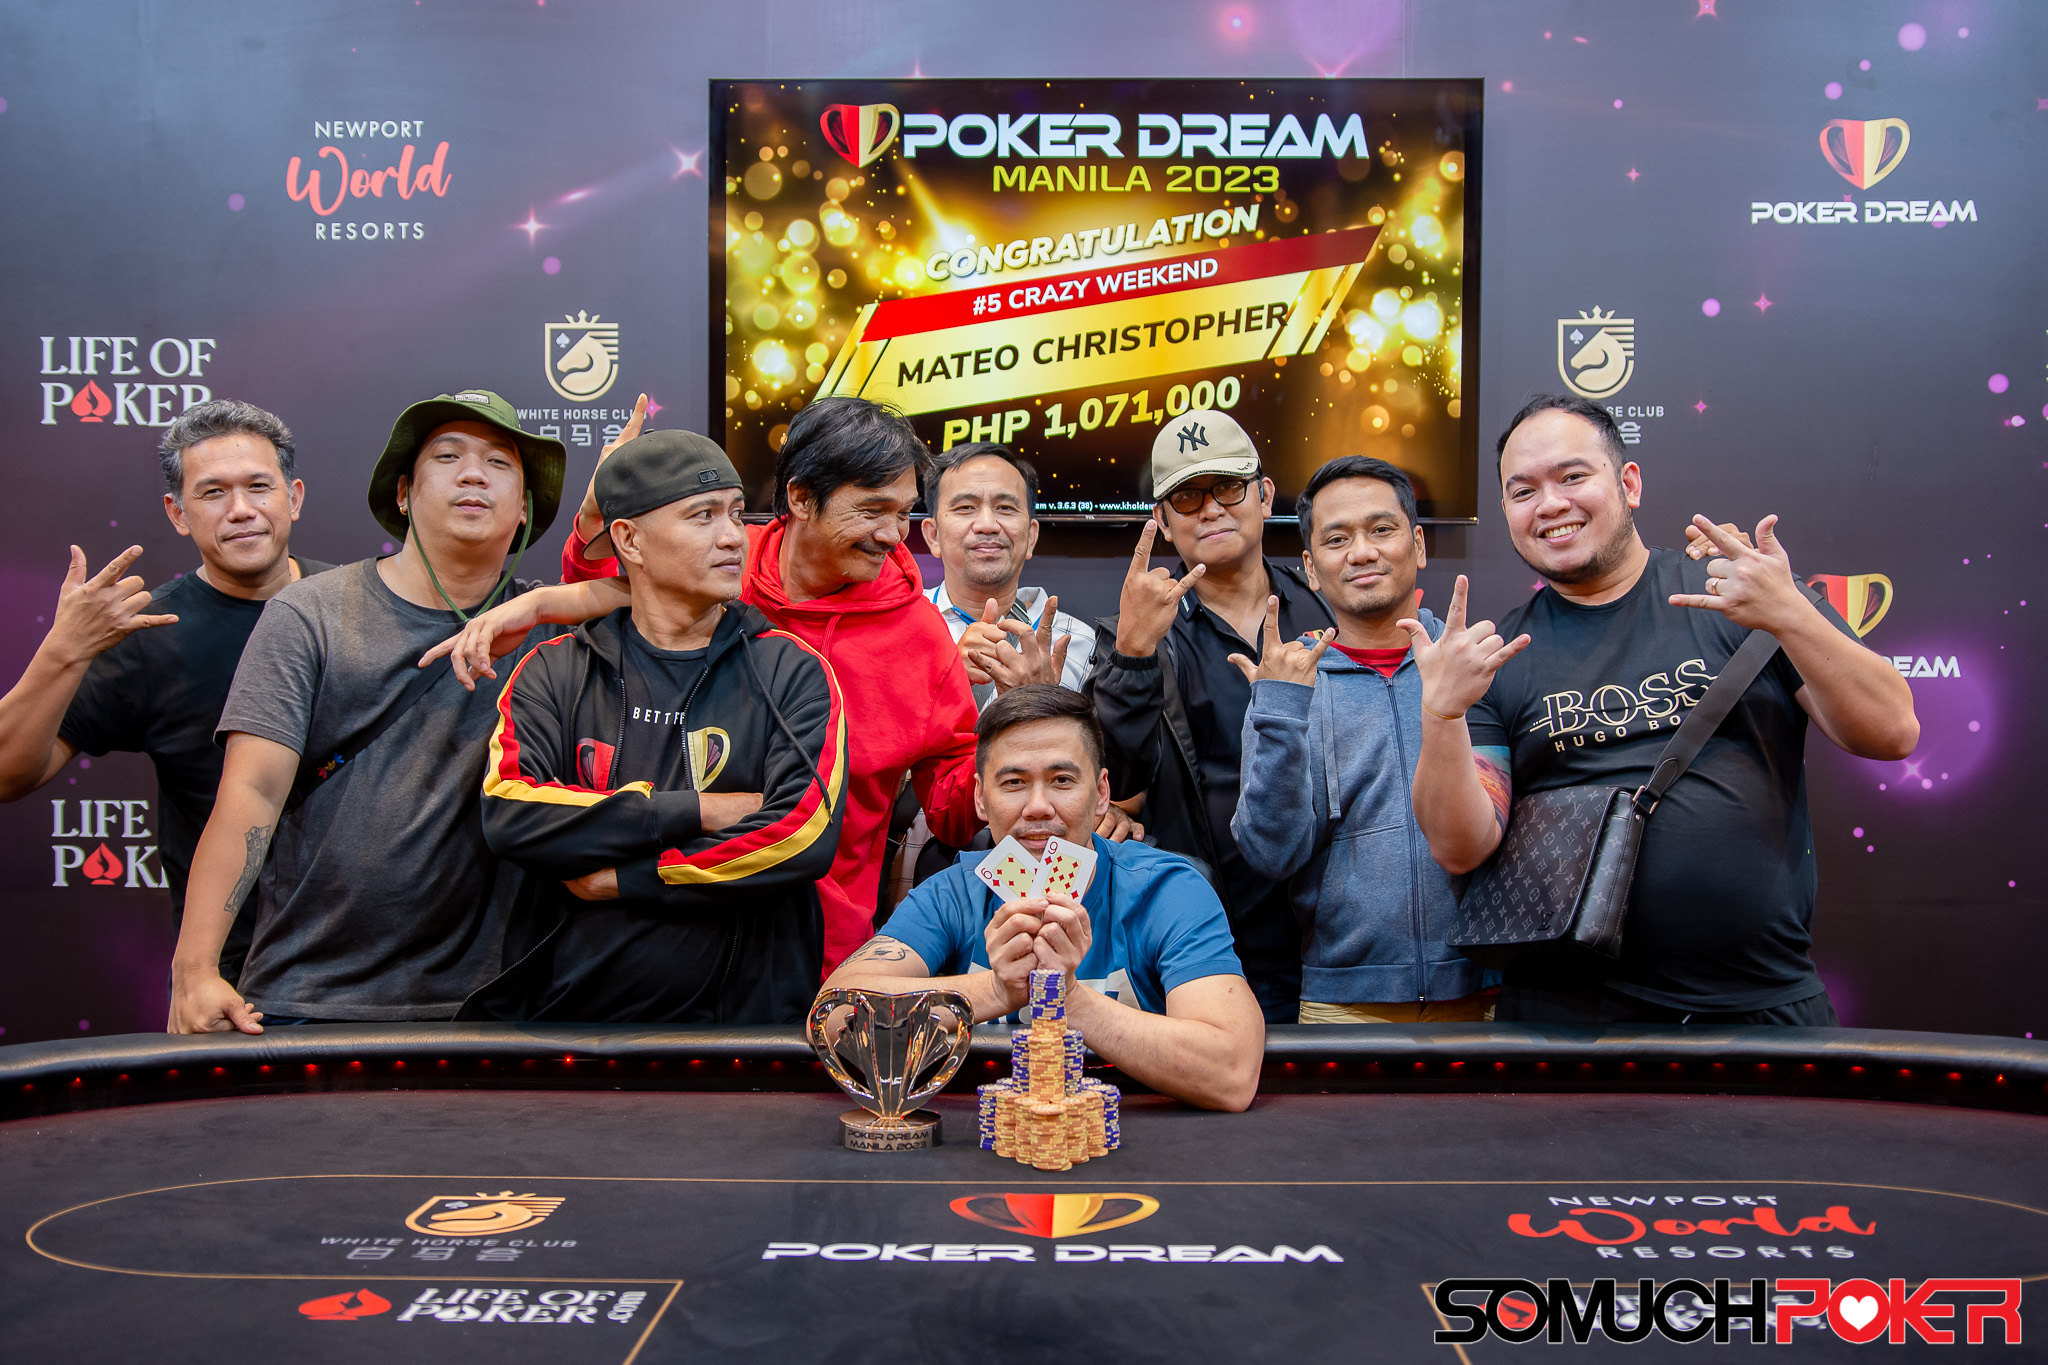 Poker Dream Manila: White Horse Cup Short Deck SHR race to the crown today; Christopher Mateo, Rene Van Krevelen, Seungsoo Jeon, Sang Won Song, Duhan Lee win trophies